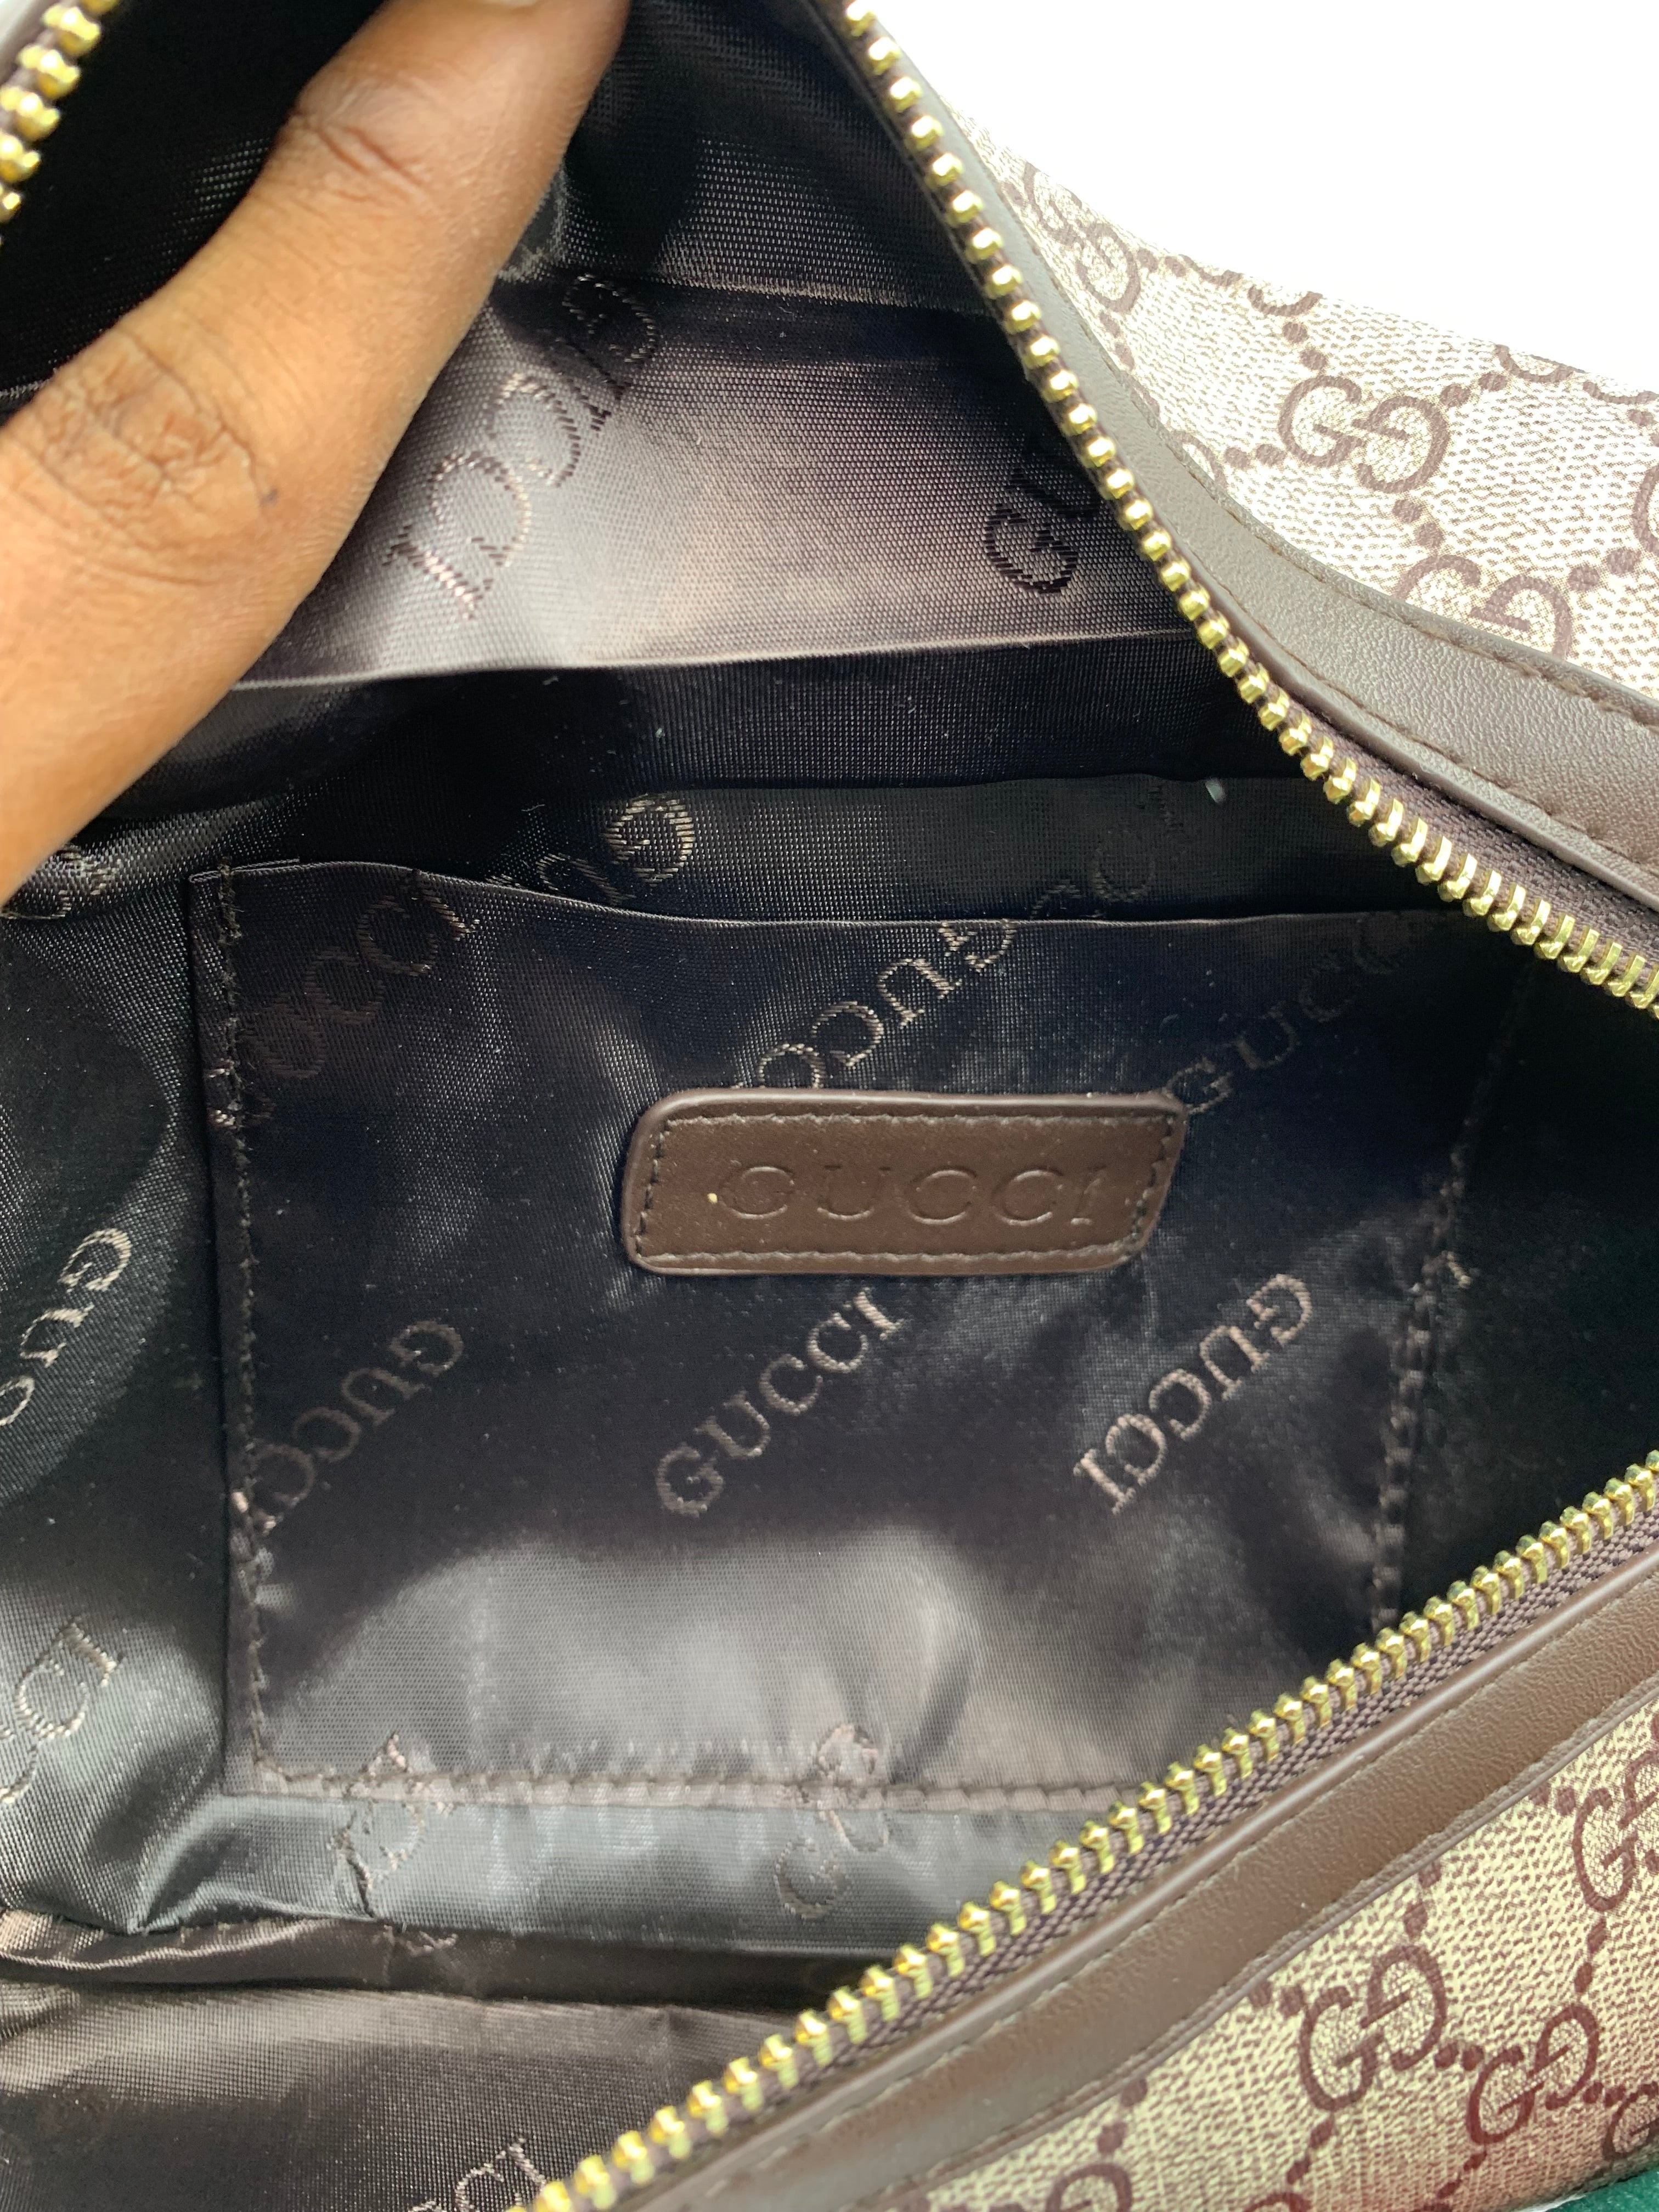 Guci Brand PU Leather Stylish For Woman Hand Bag